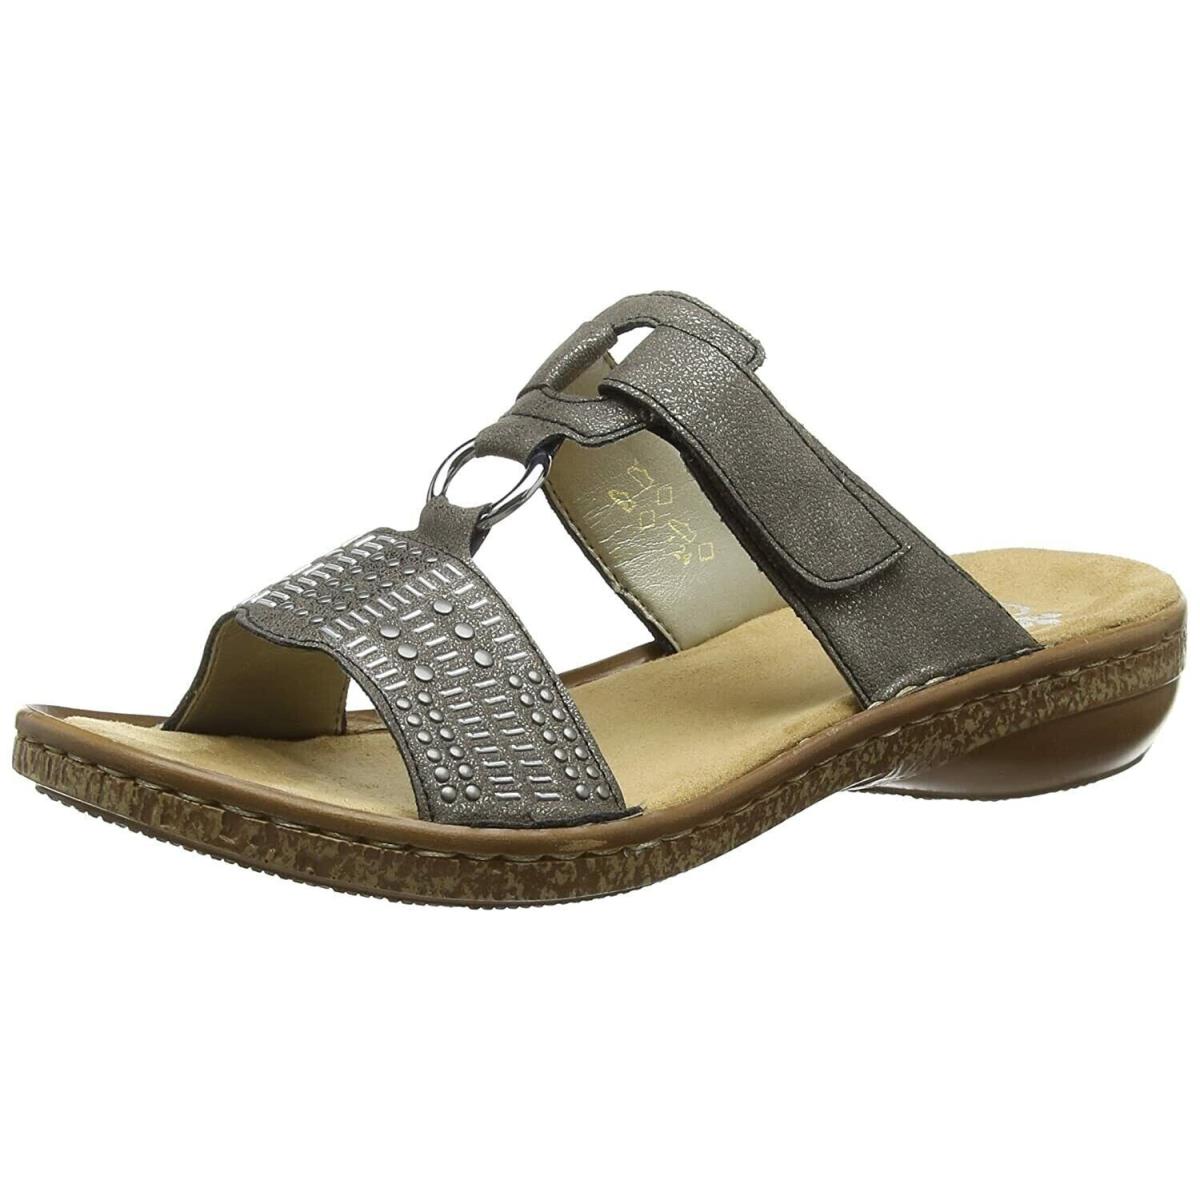 Rieker Women`s 62854-45 Open Toe Adjustable Casual Sandals Size EU 41